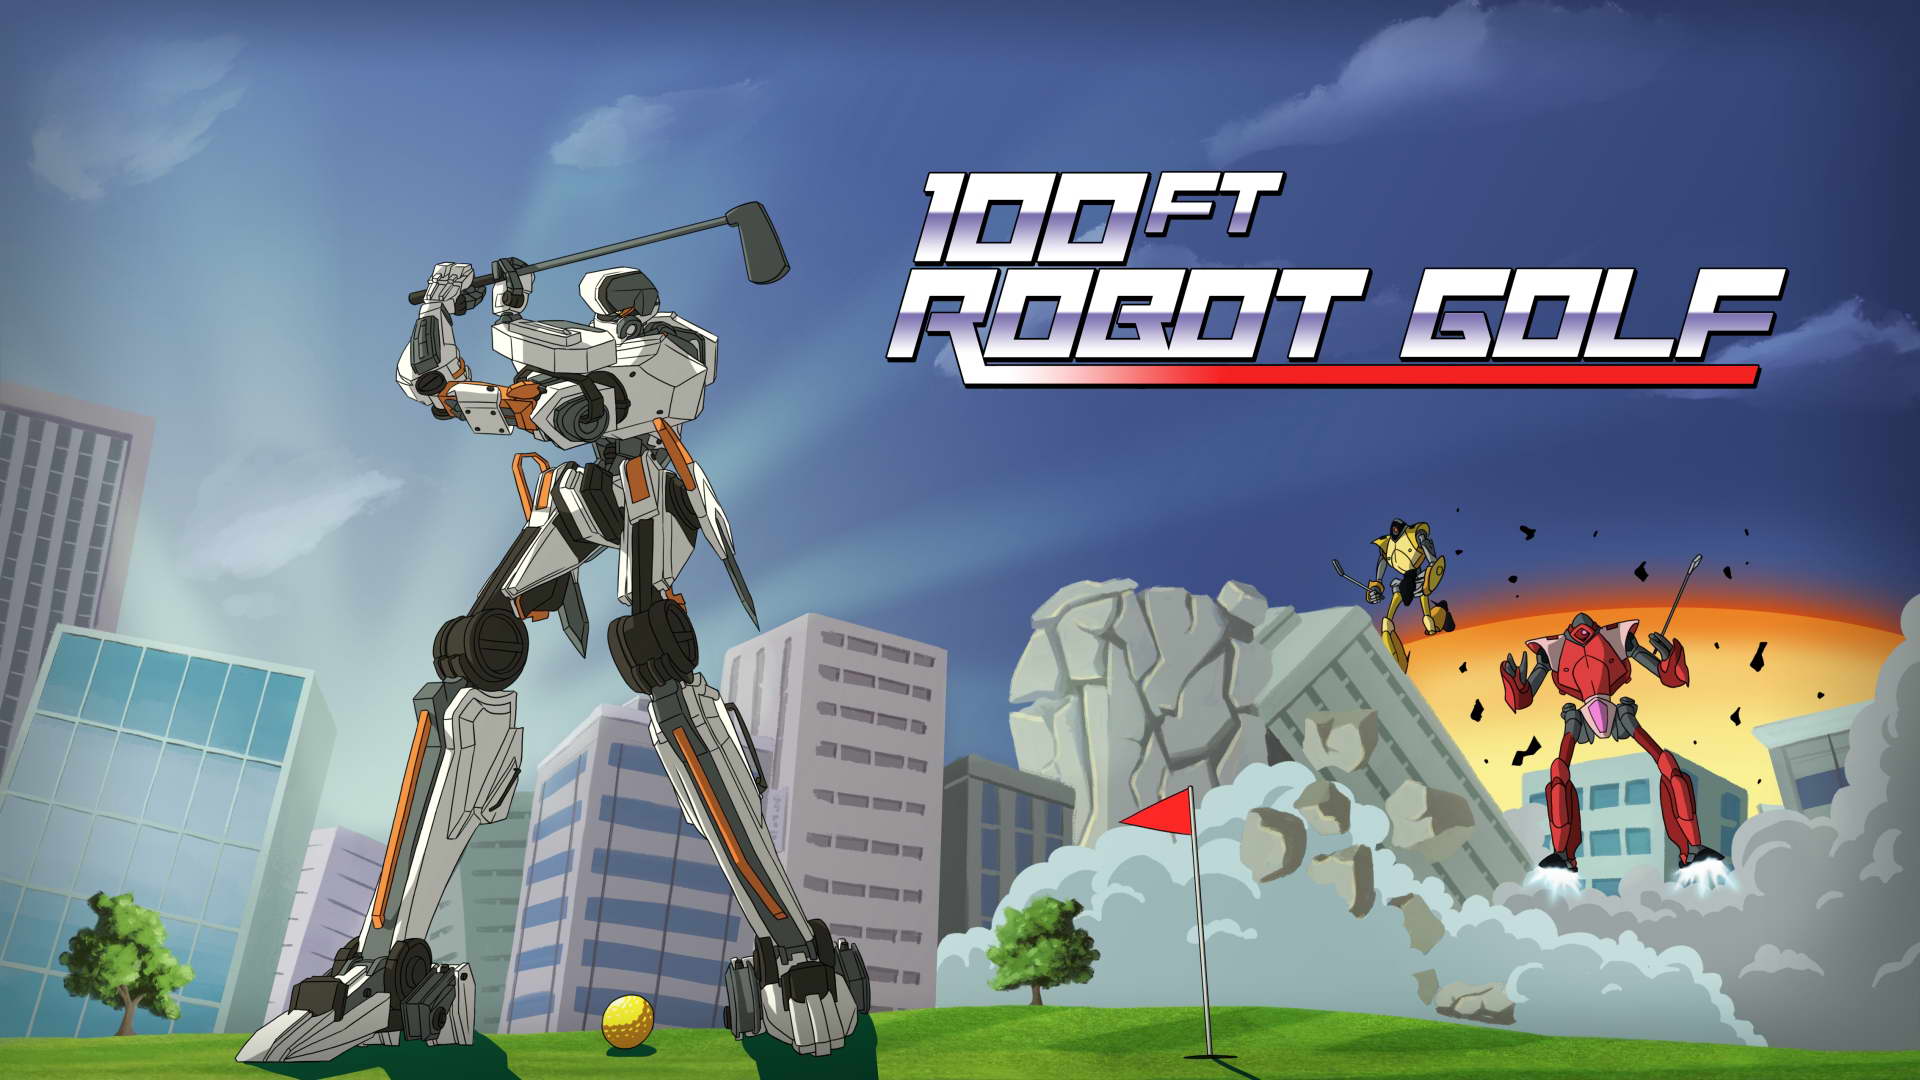 Nhập vai robot chơi golf trong 100ft Robot Golf - Tin Game